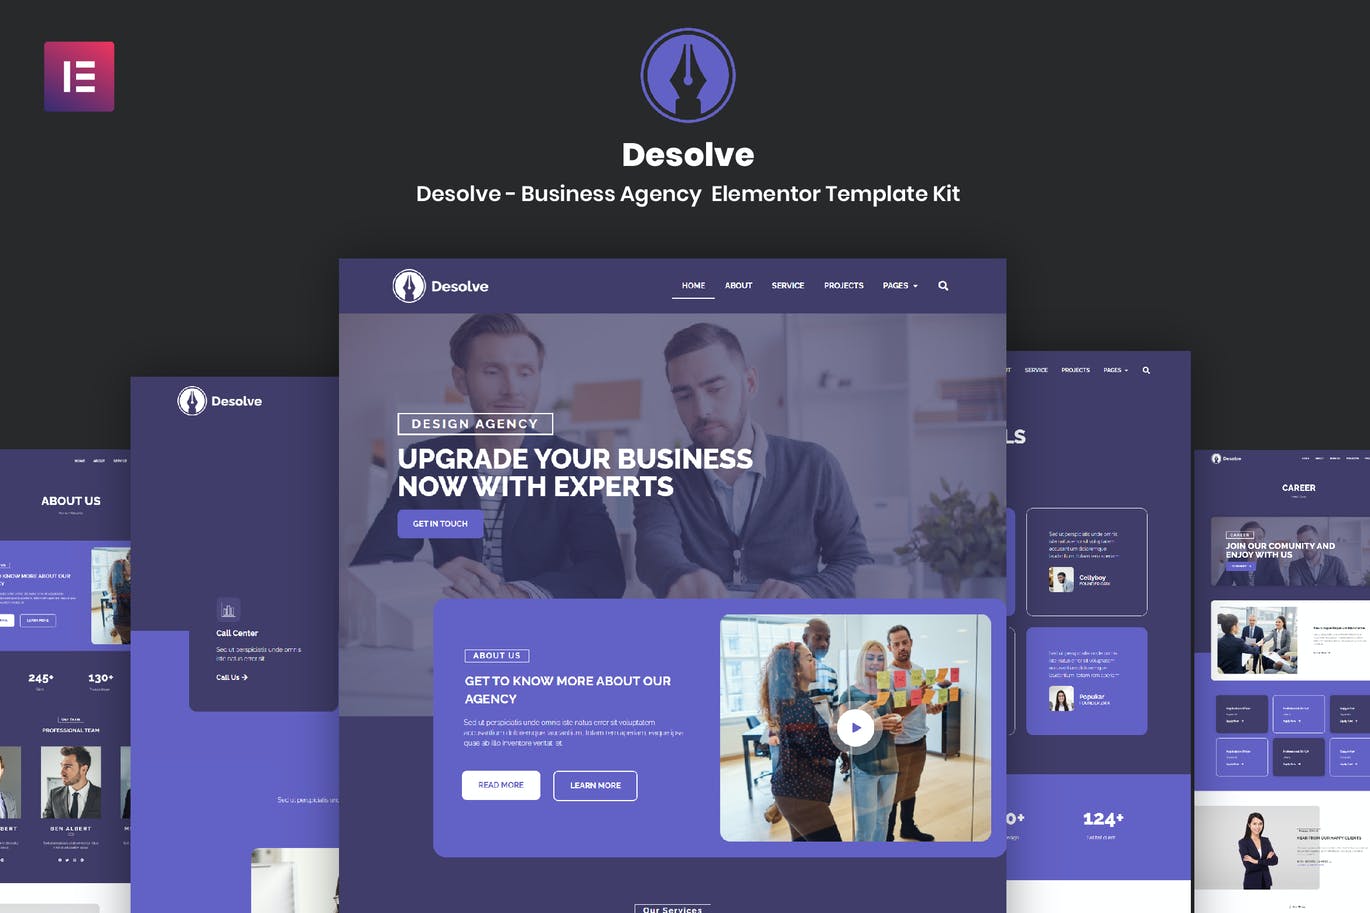 Desolve – Business Agency Elementor Template Kit